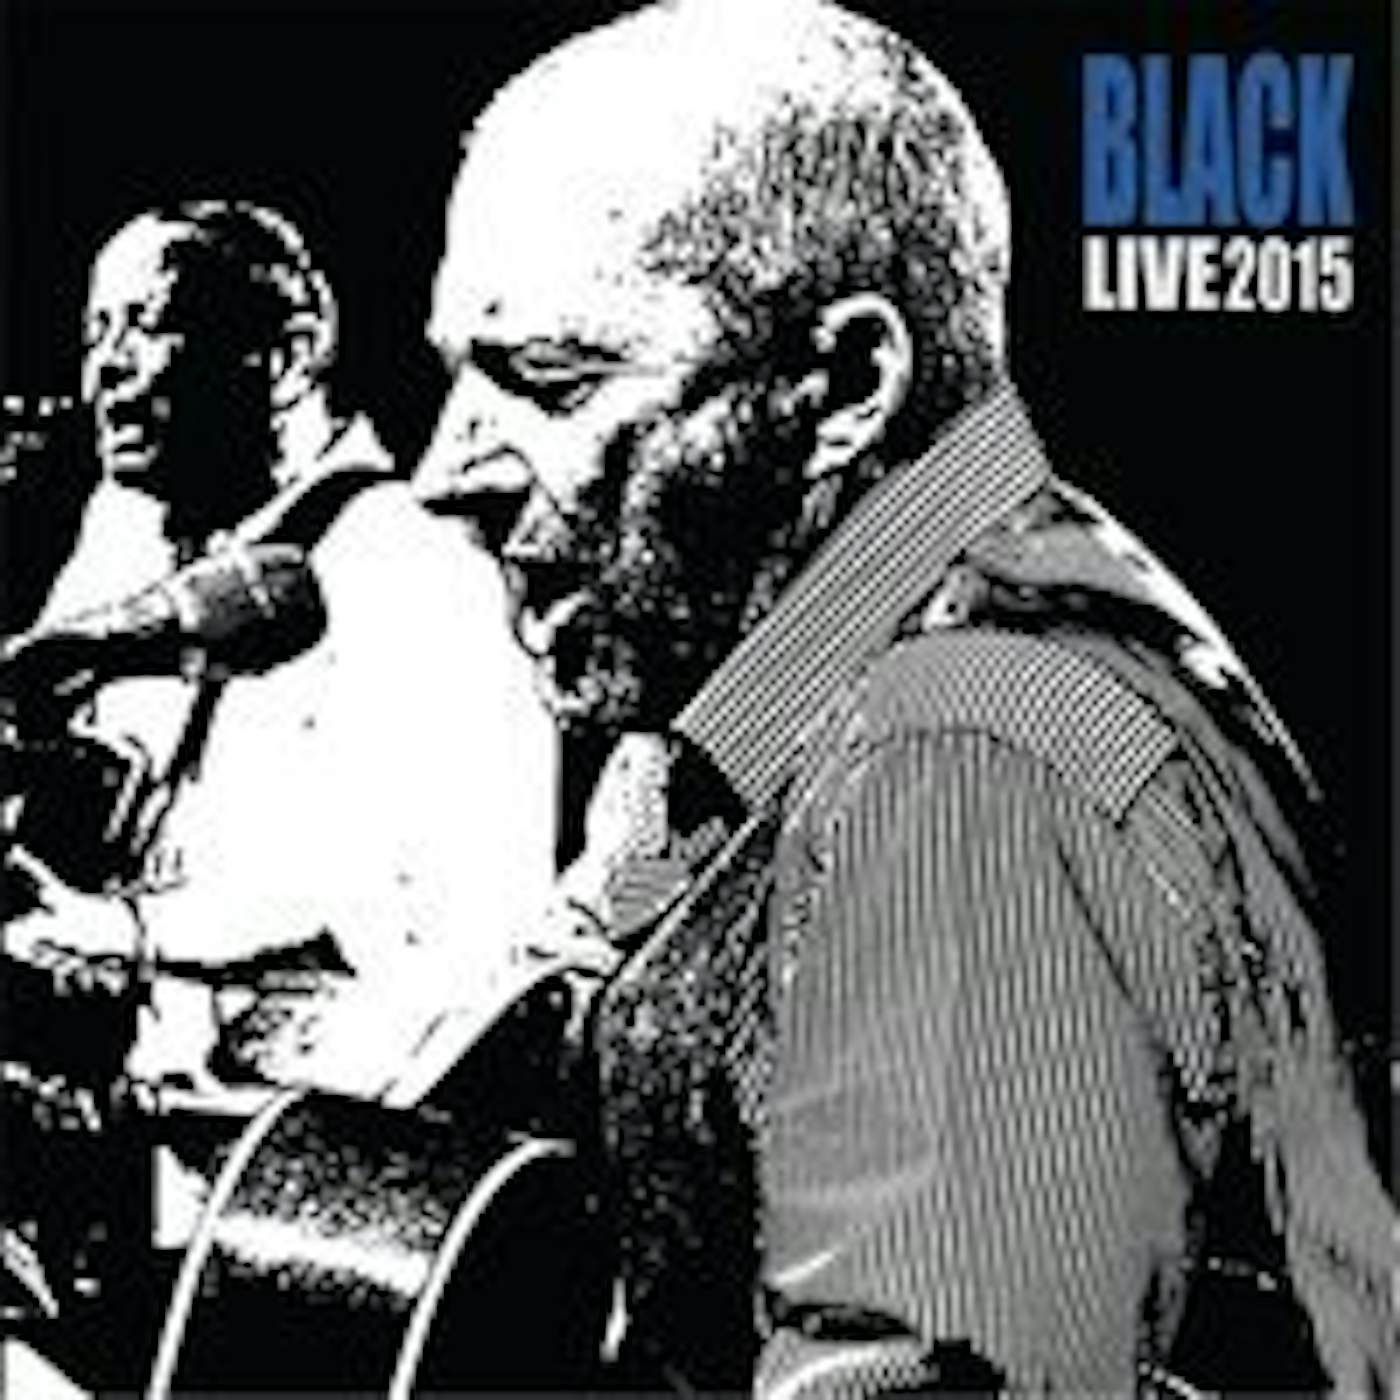 Black LIVE 2015 CD